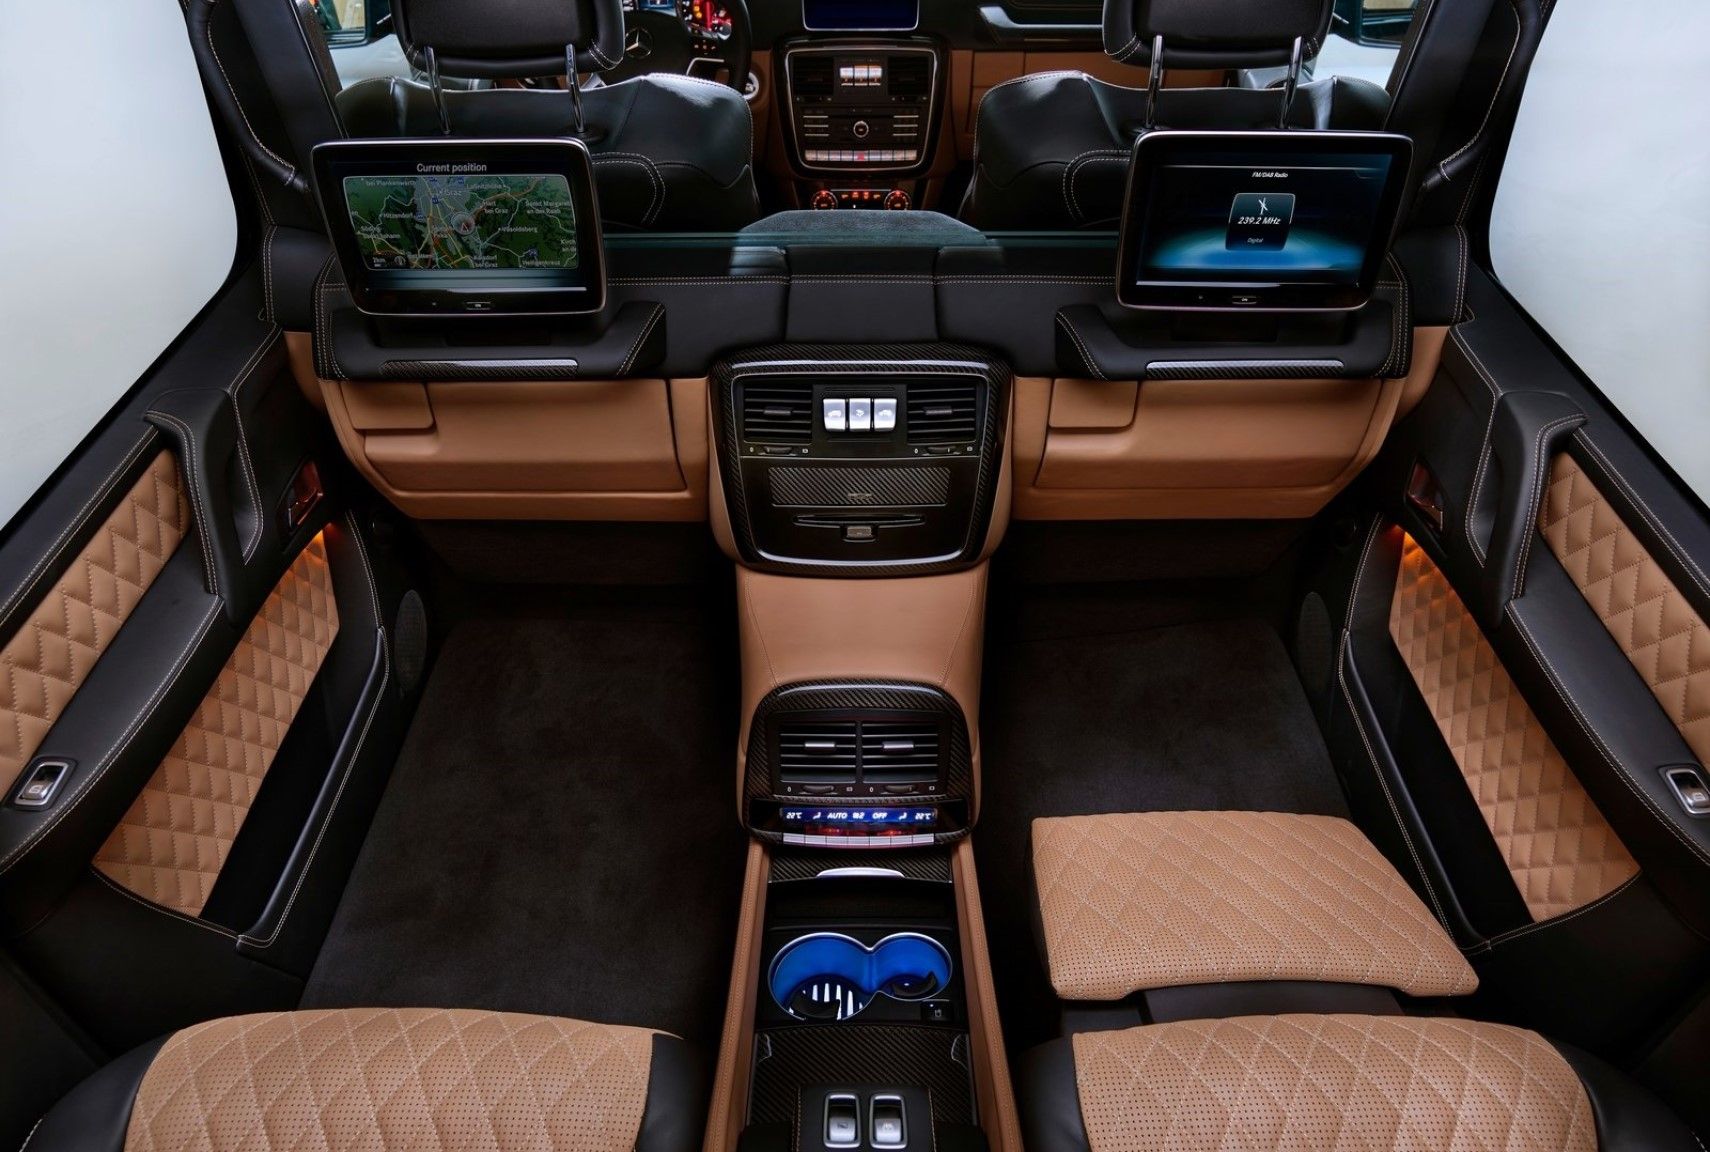 Mercedes Maybach G650 Landaulet interior rear seating view